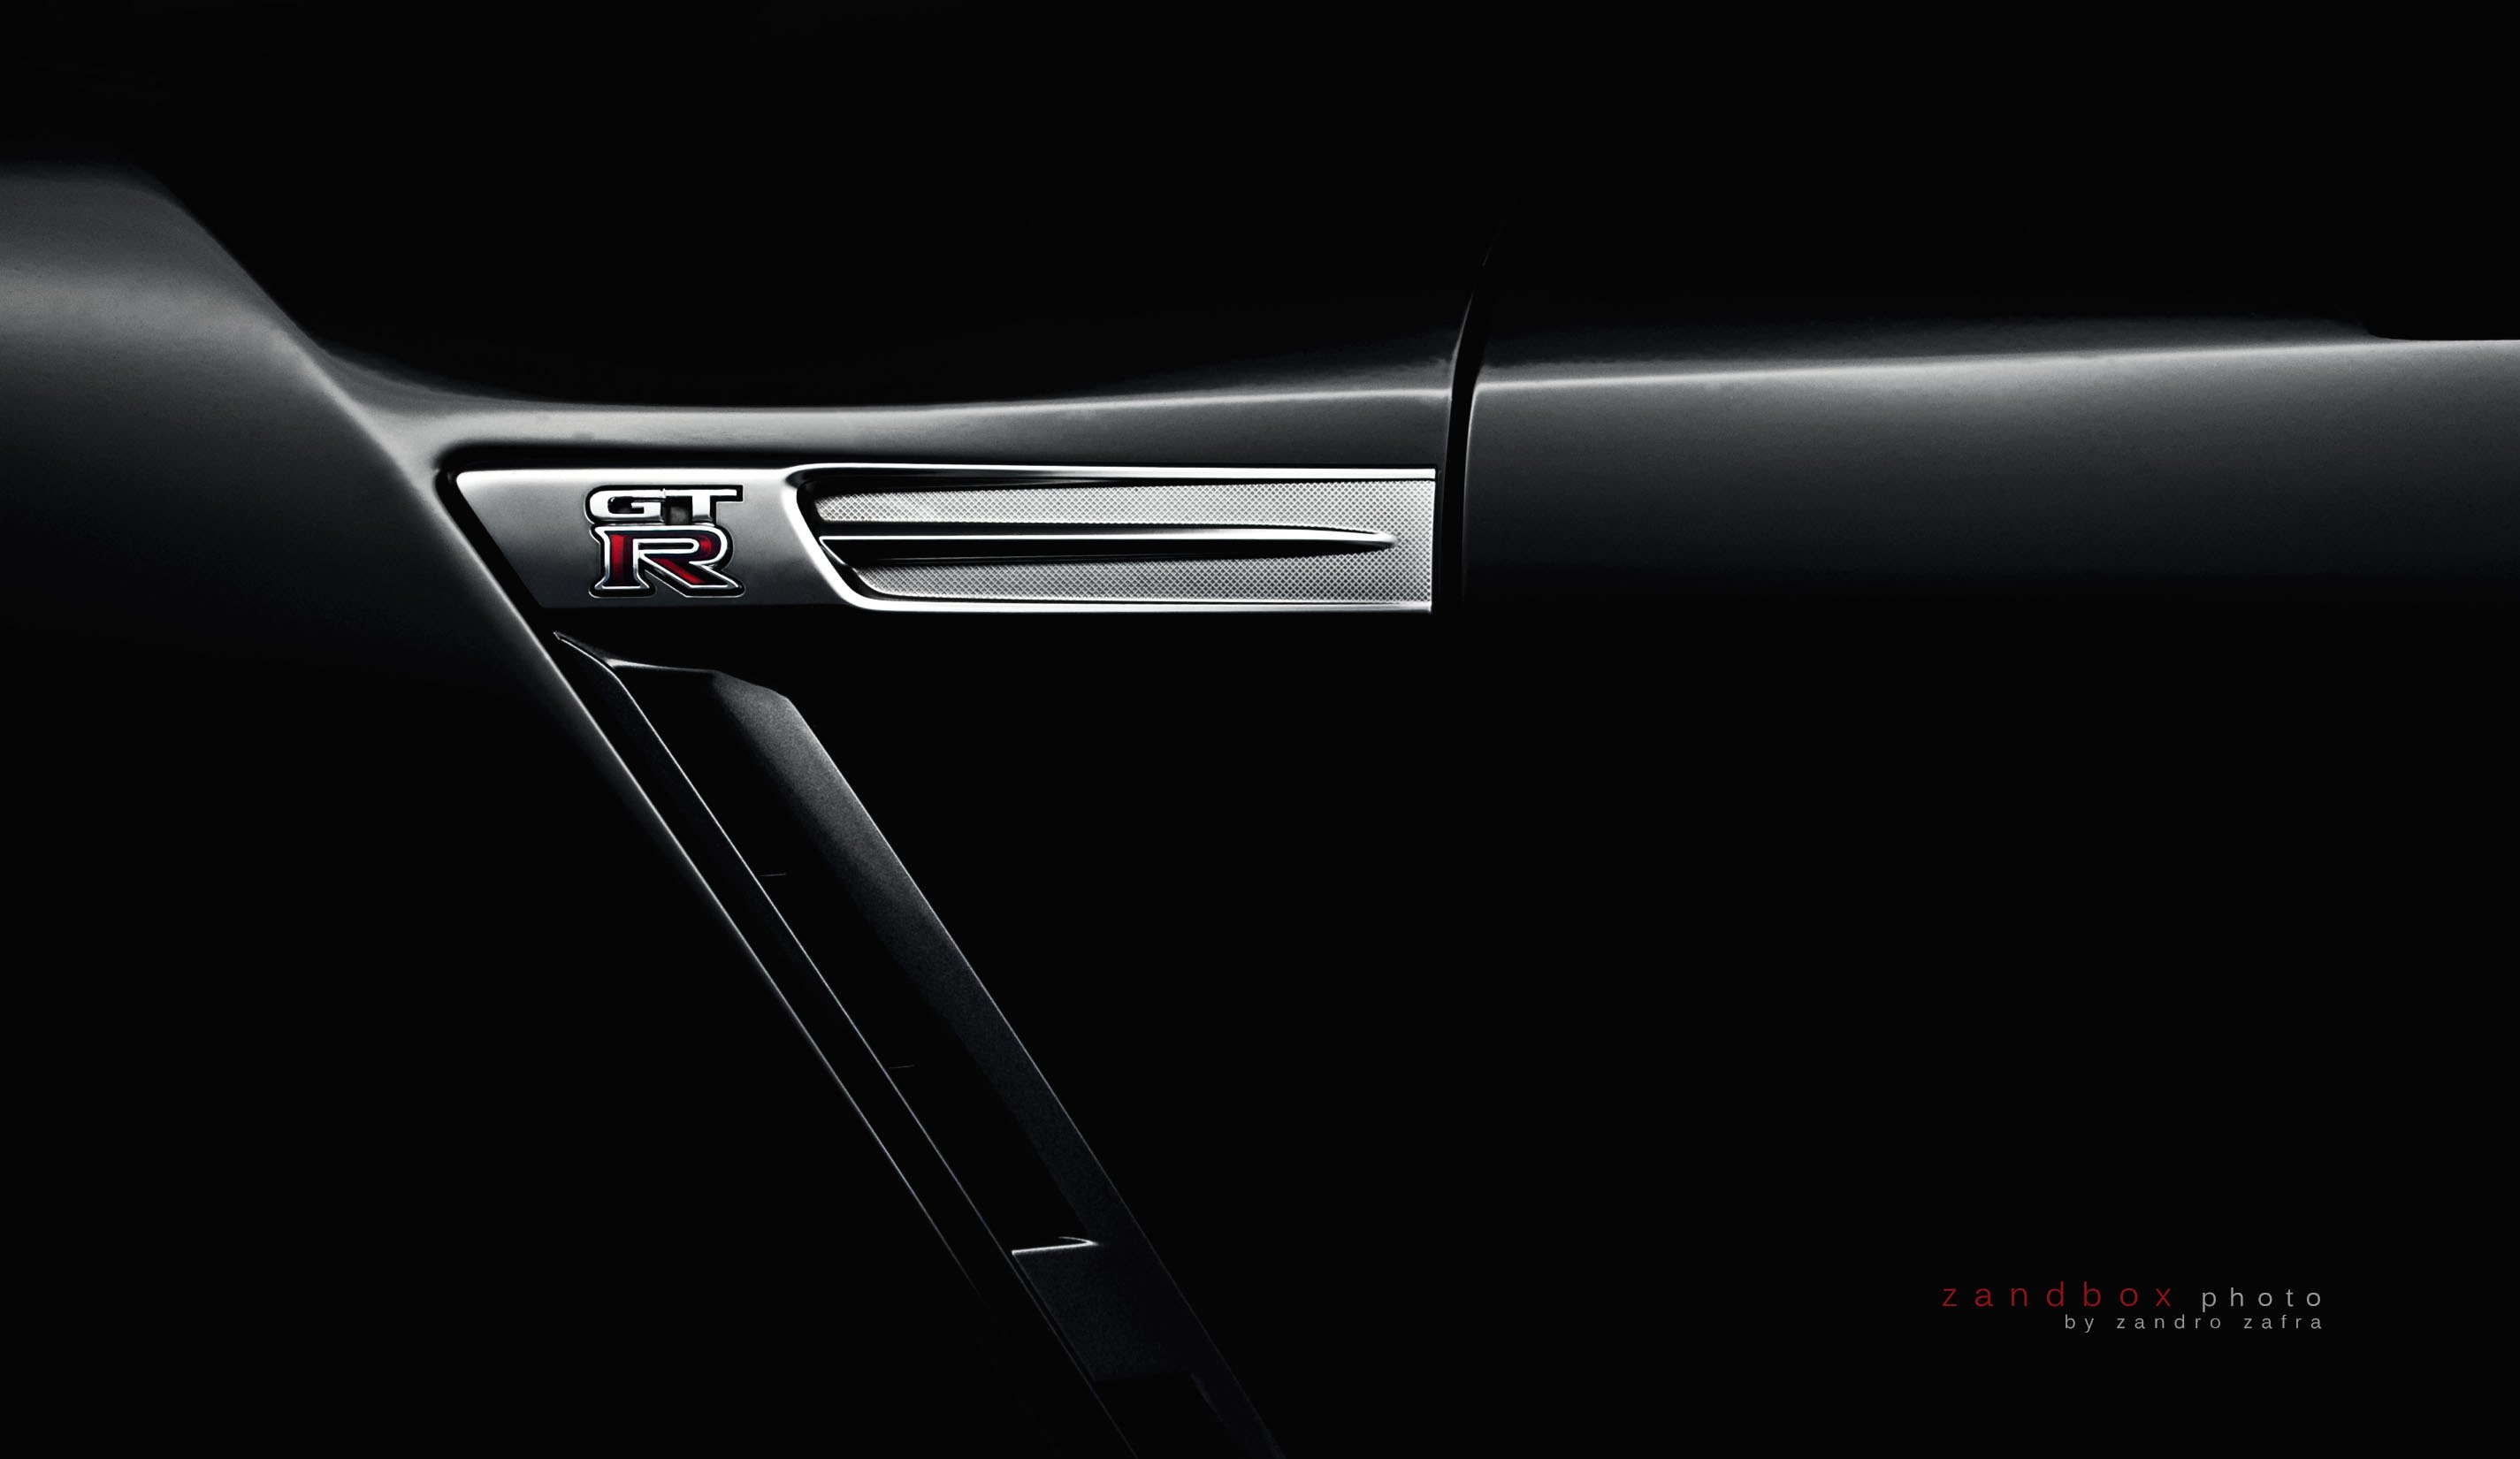 Black Nissan GT-R with Chrome Side Vents - Photo by zandbox